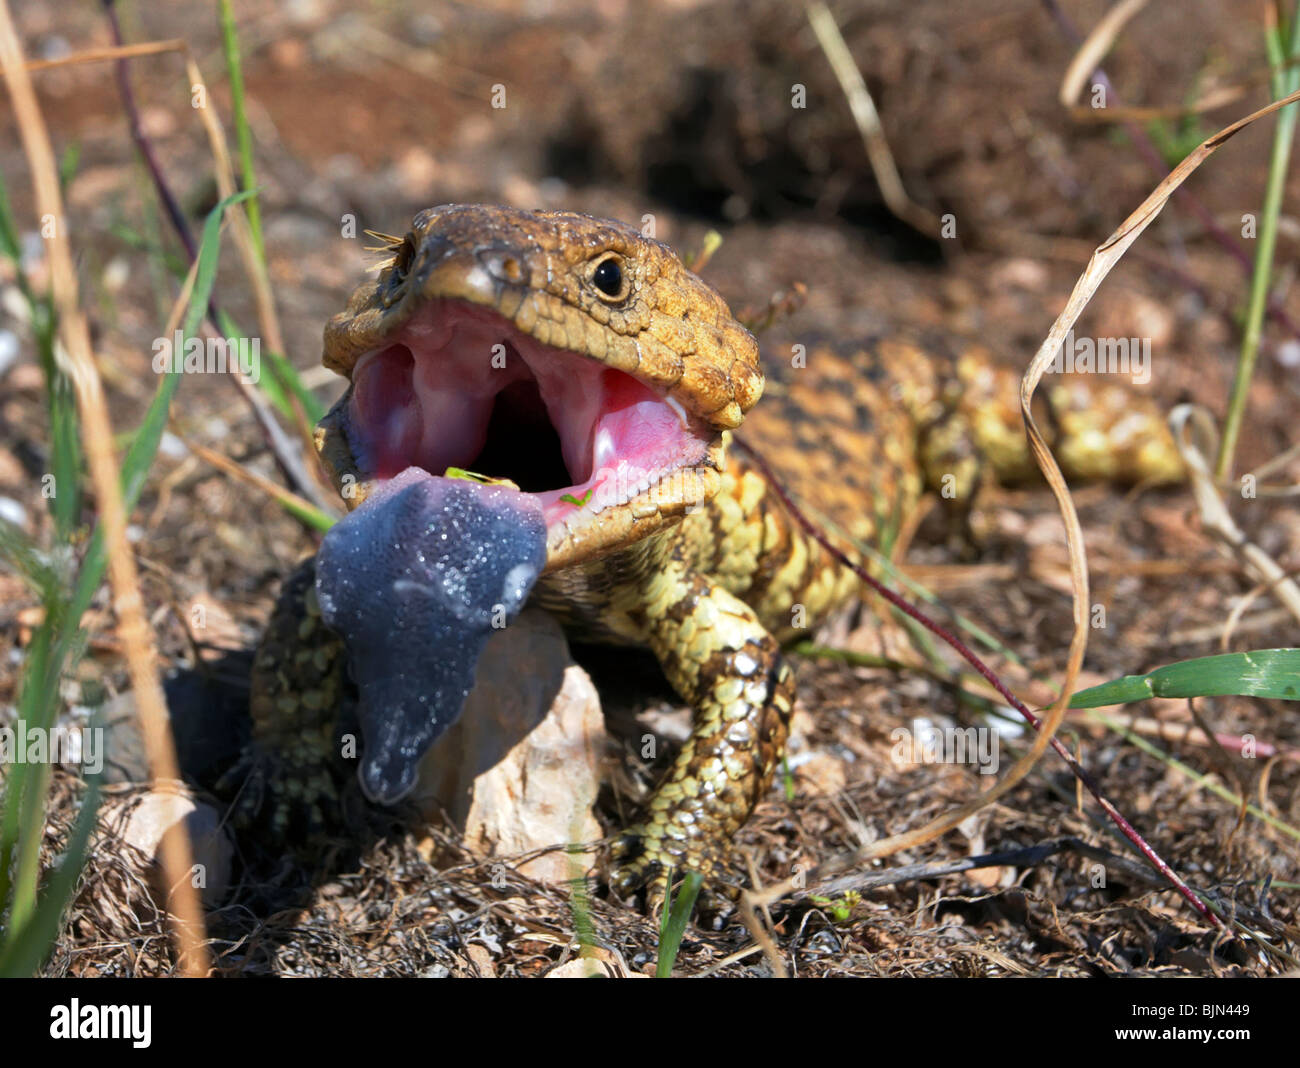 Australian Blotched Blue Tongue Lizard Stock Photo